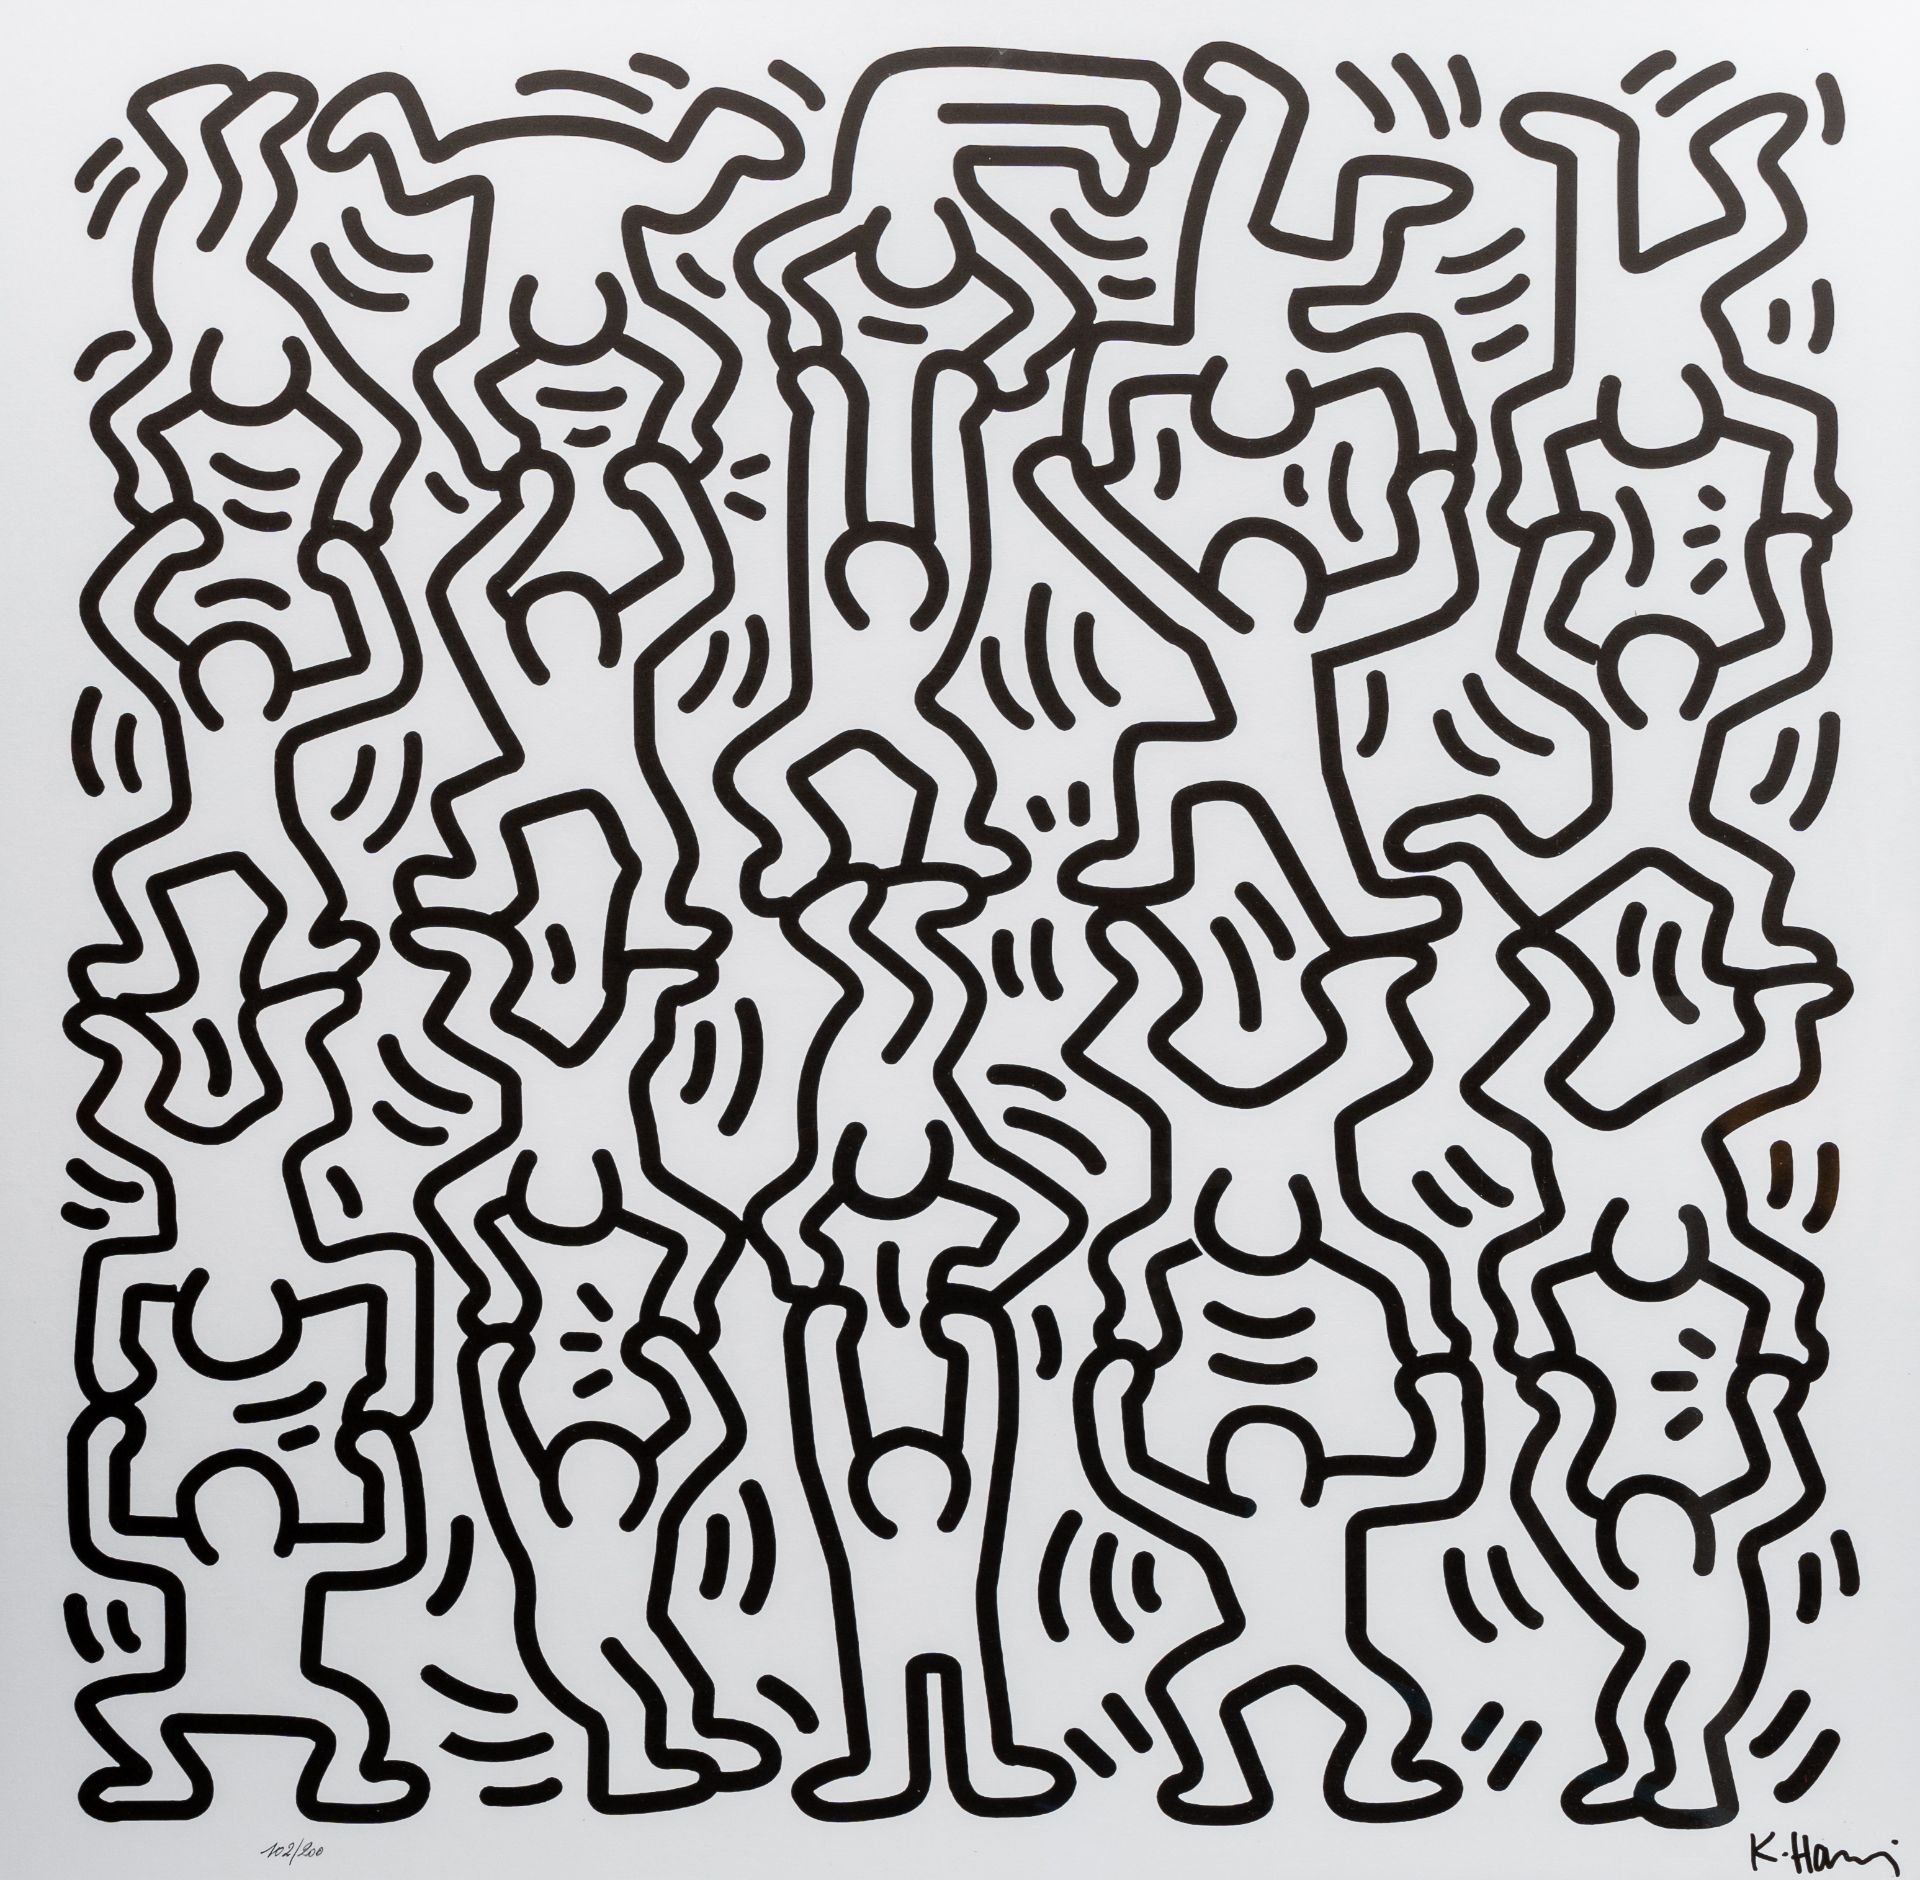 Keith Haring (1958-1990, after): 'Acrobat', serigraph, 102/200